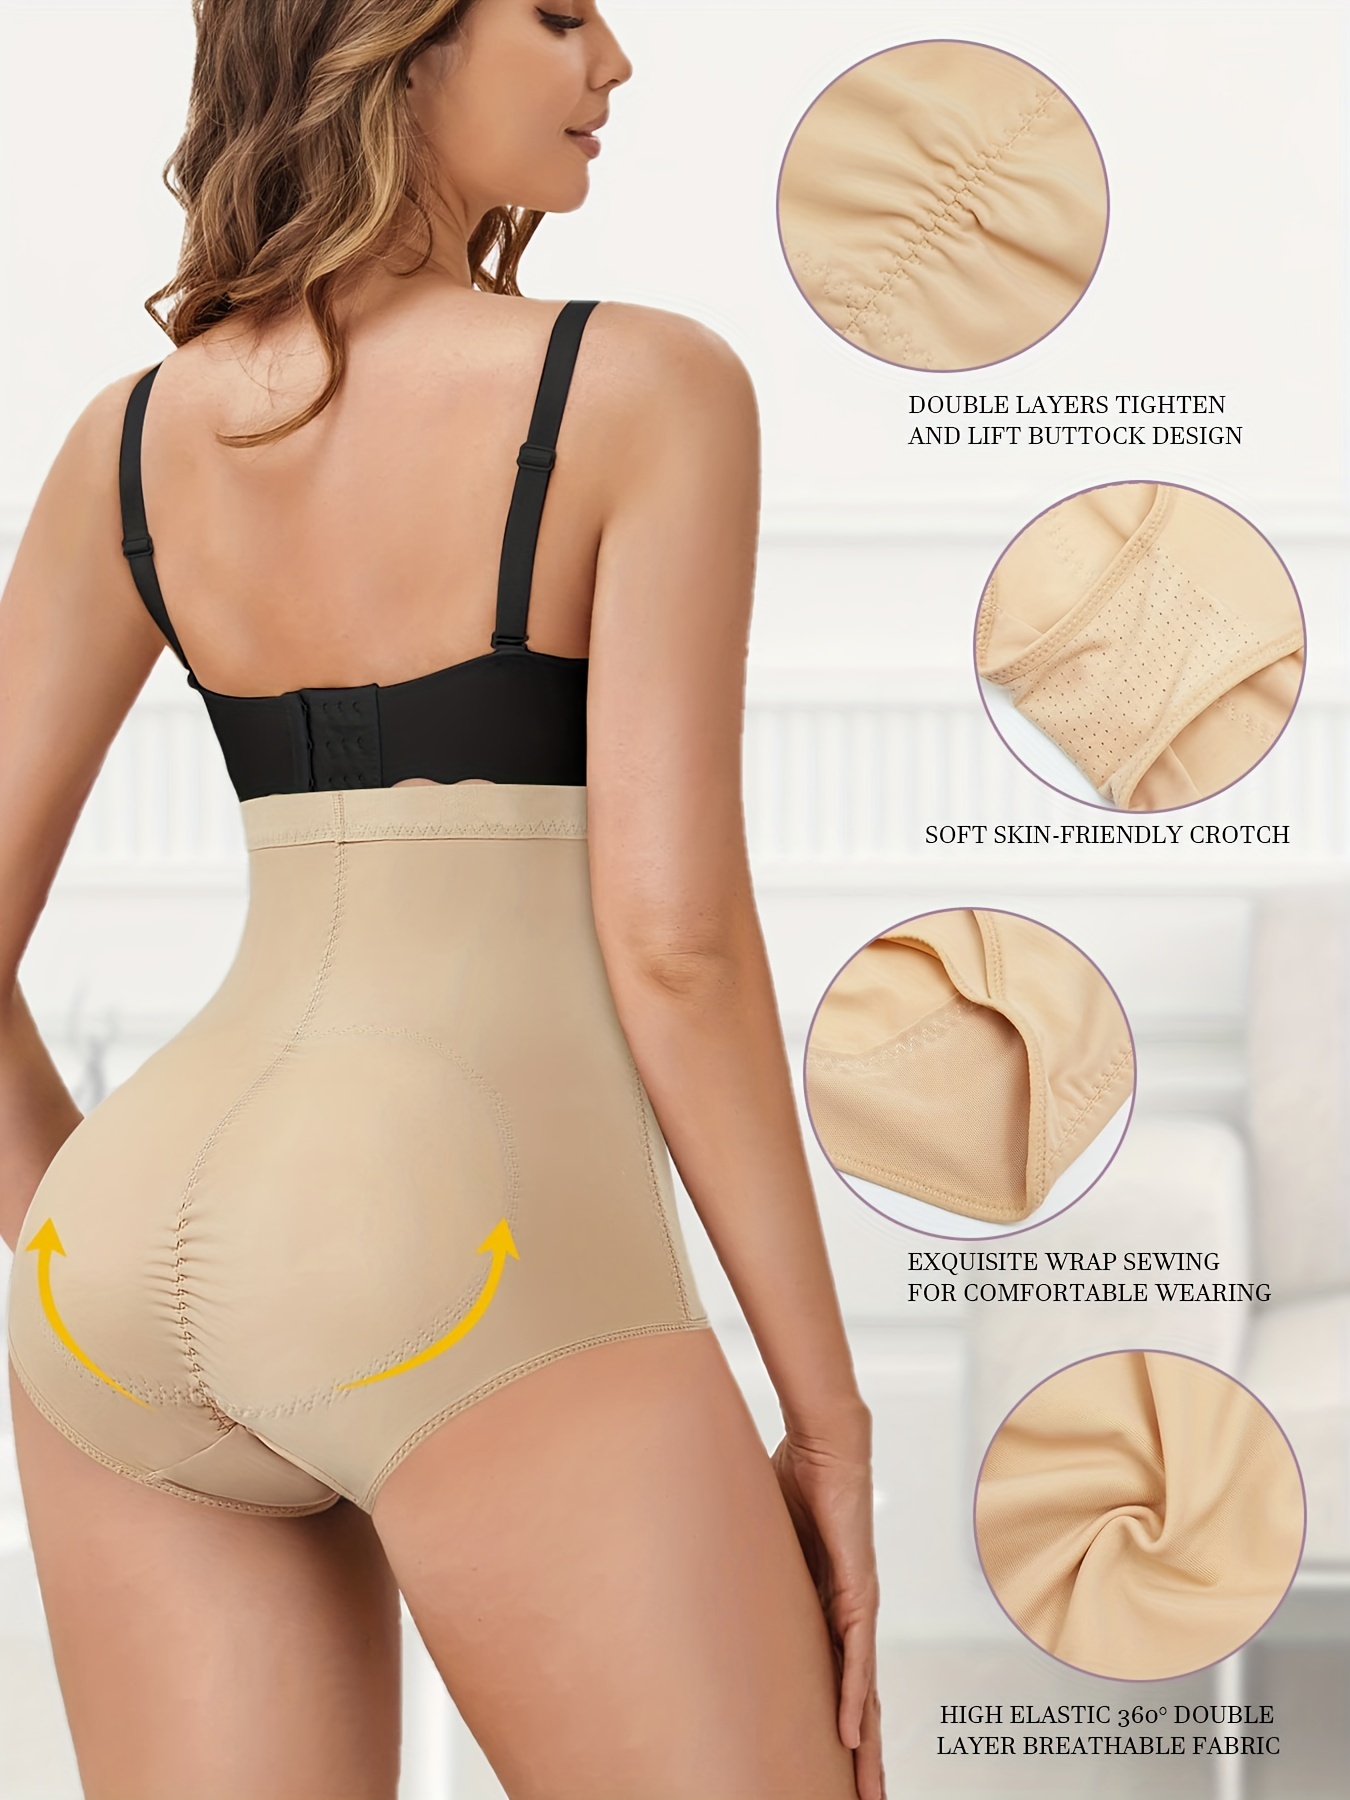 Women High Waist Belly Control Underwear Waist Trainer Shapewear